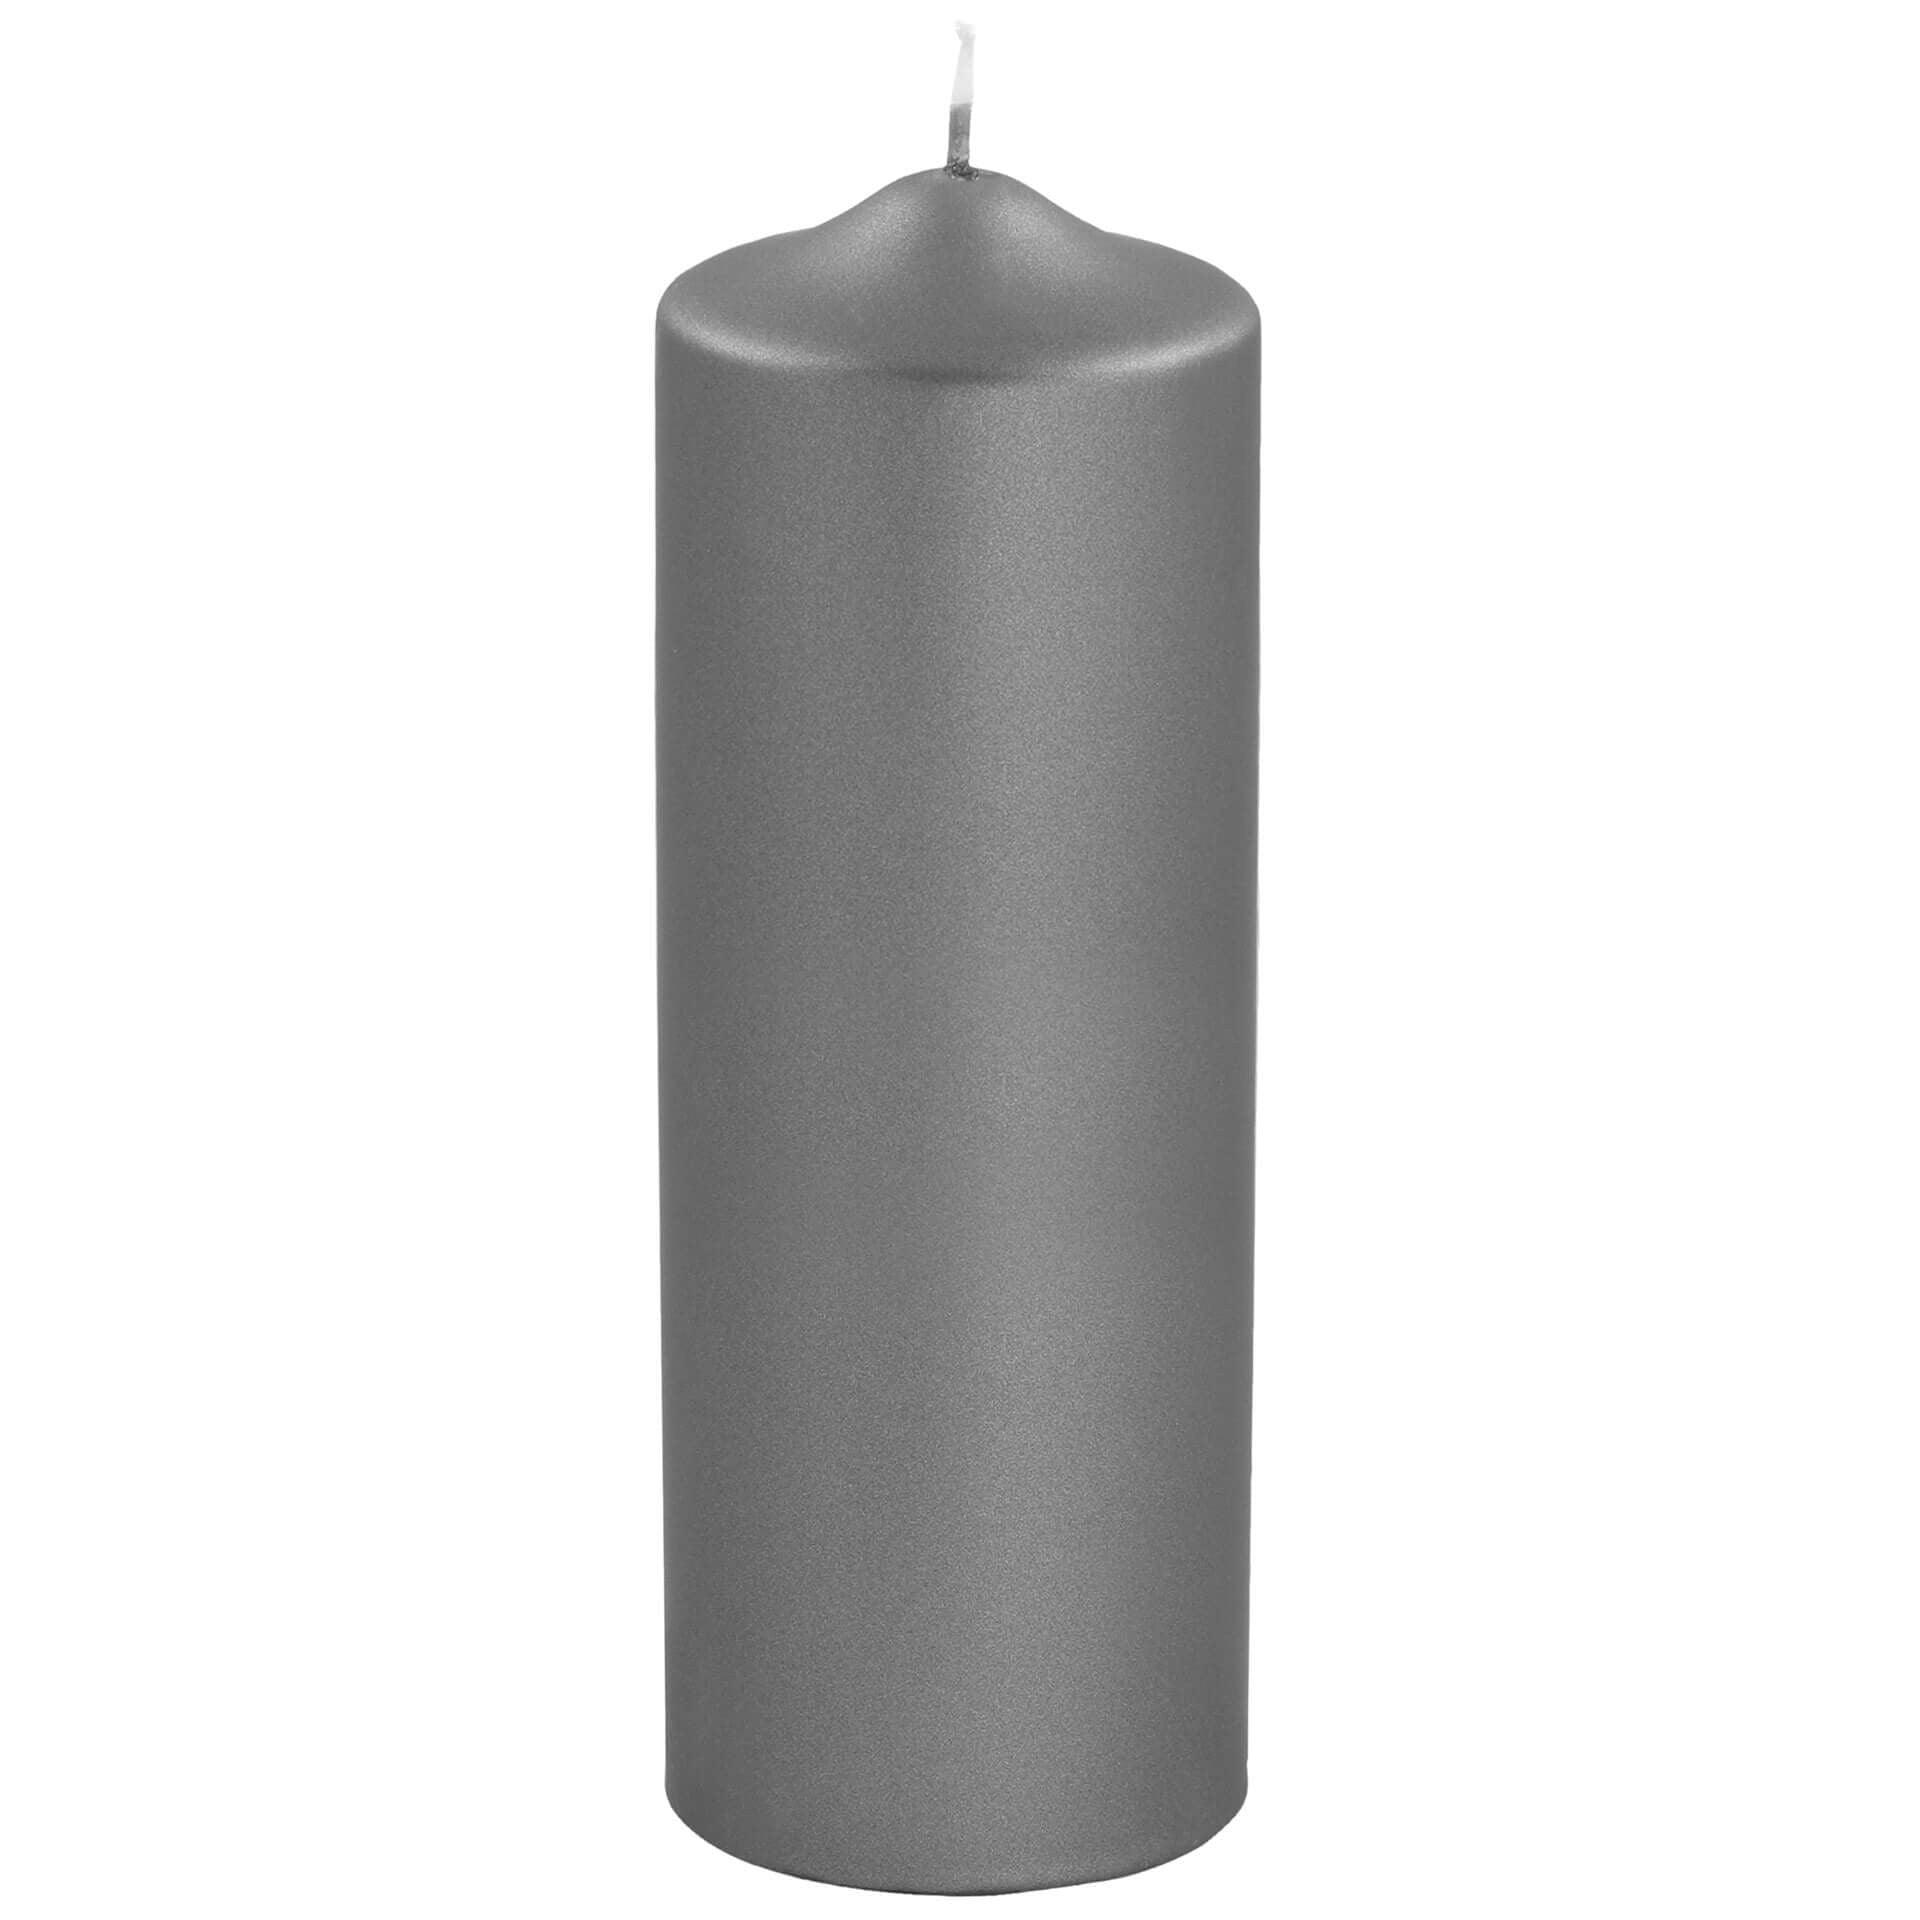 Fink Candle Altarkerze getaucht Stumpenkerze metallic Grau 25cm - HomeDesign Knaus wir schaffen Inspirationen 